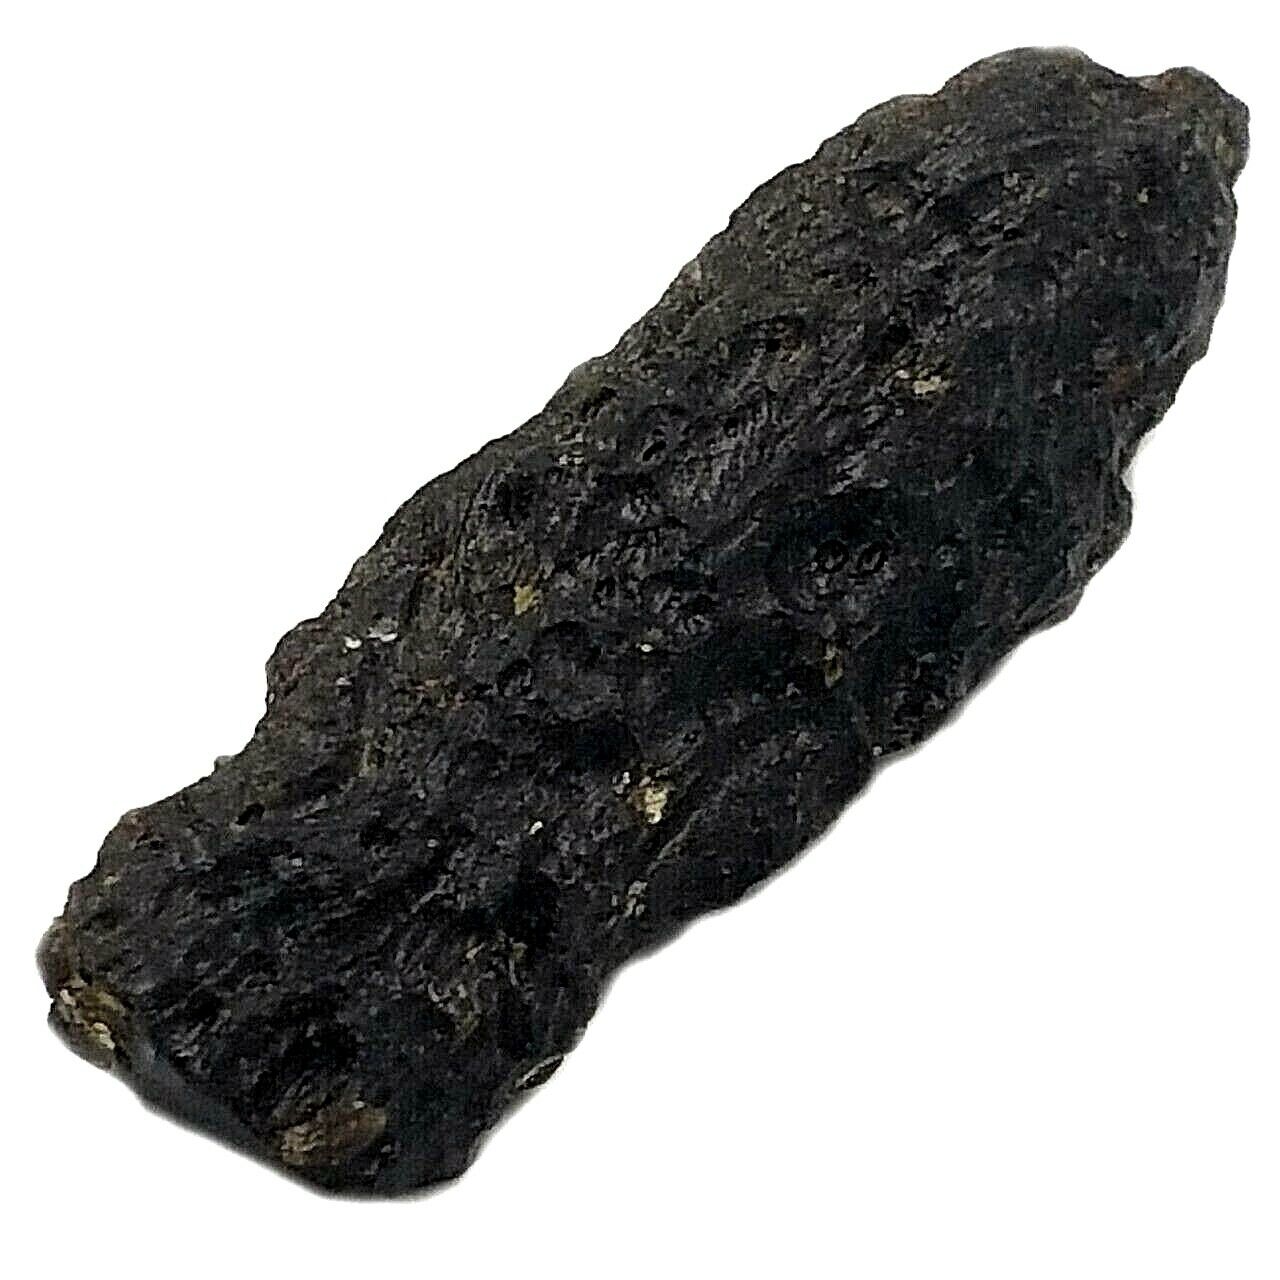 Meteorite black tektite space rock perfect rods stone original rough charm 